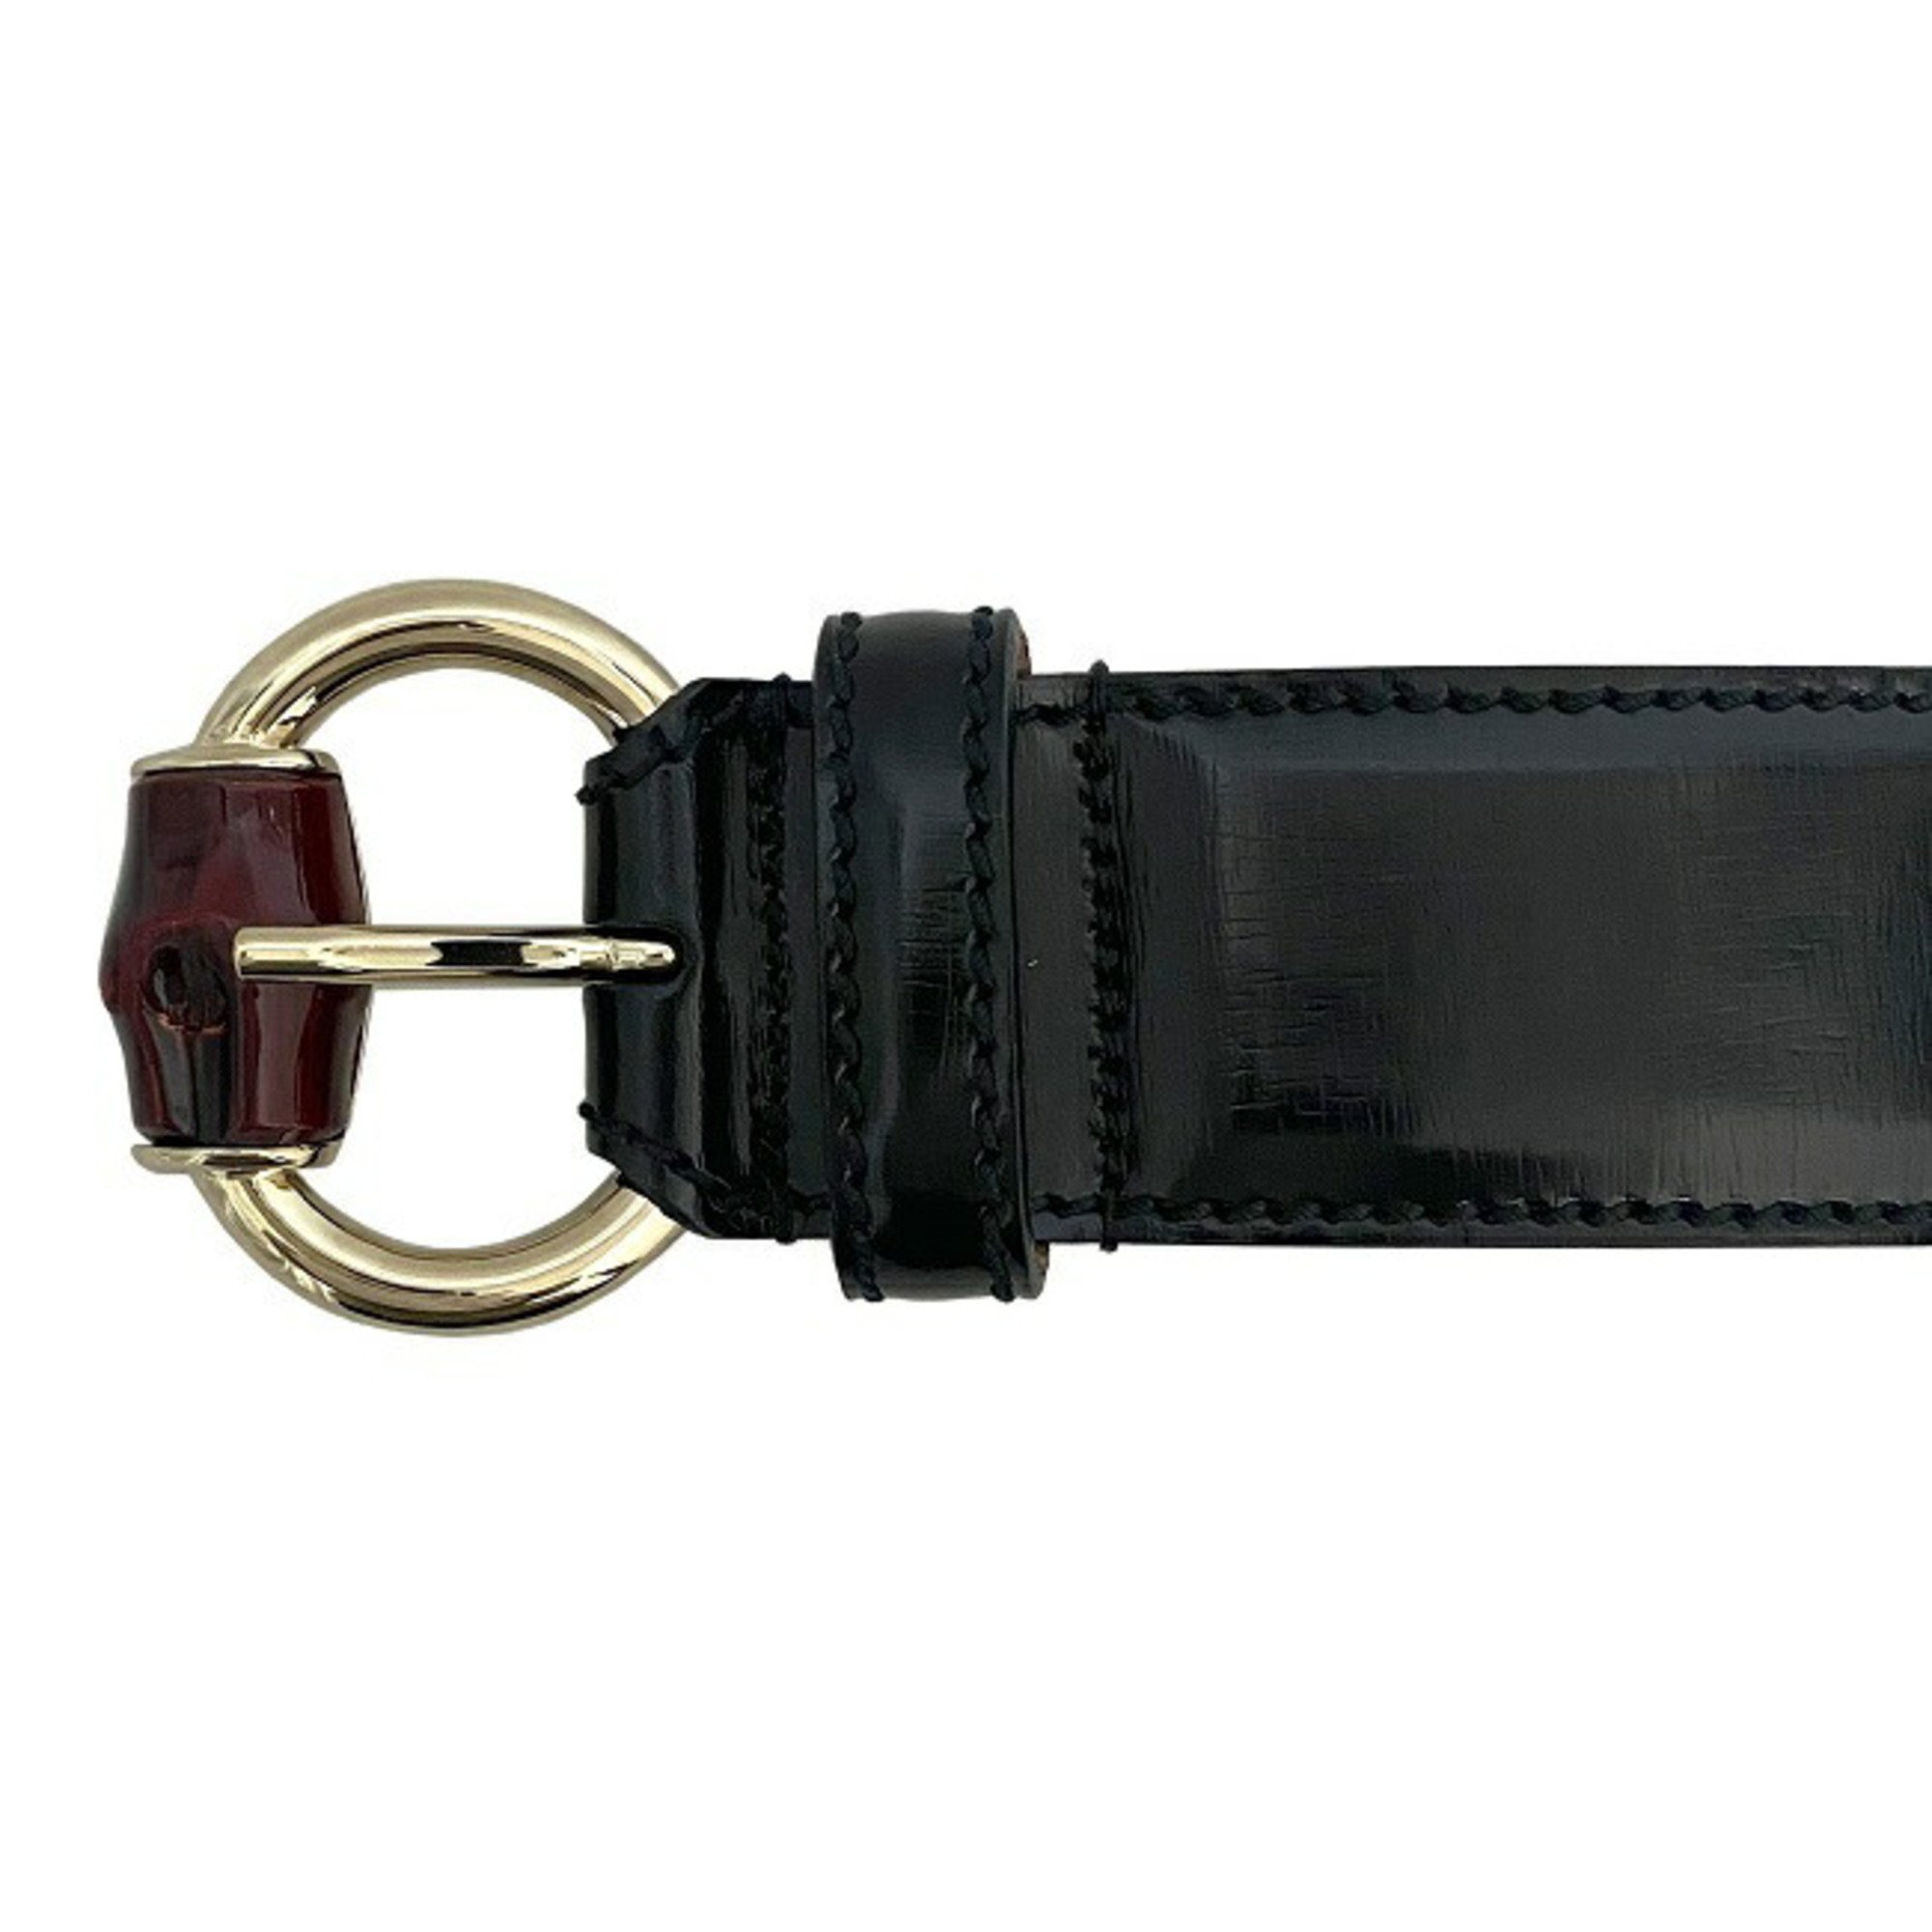 Gucci Belt Black Beige Gold Bamboo 189800 Patent Leather GUCCI 40mm 83cm Waist GG Women's Men's